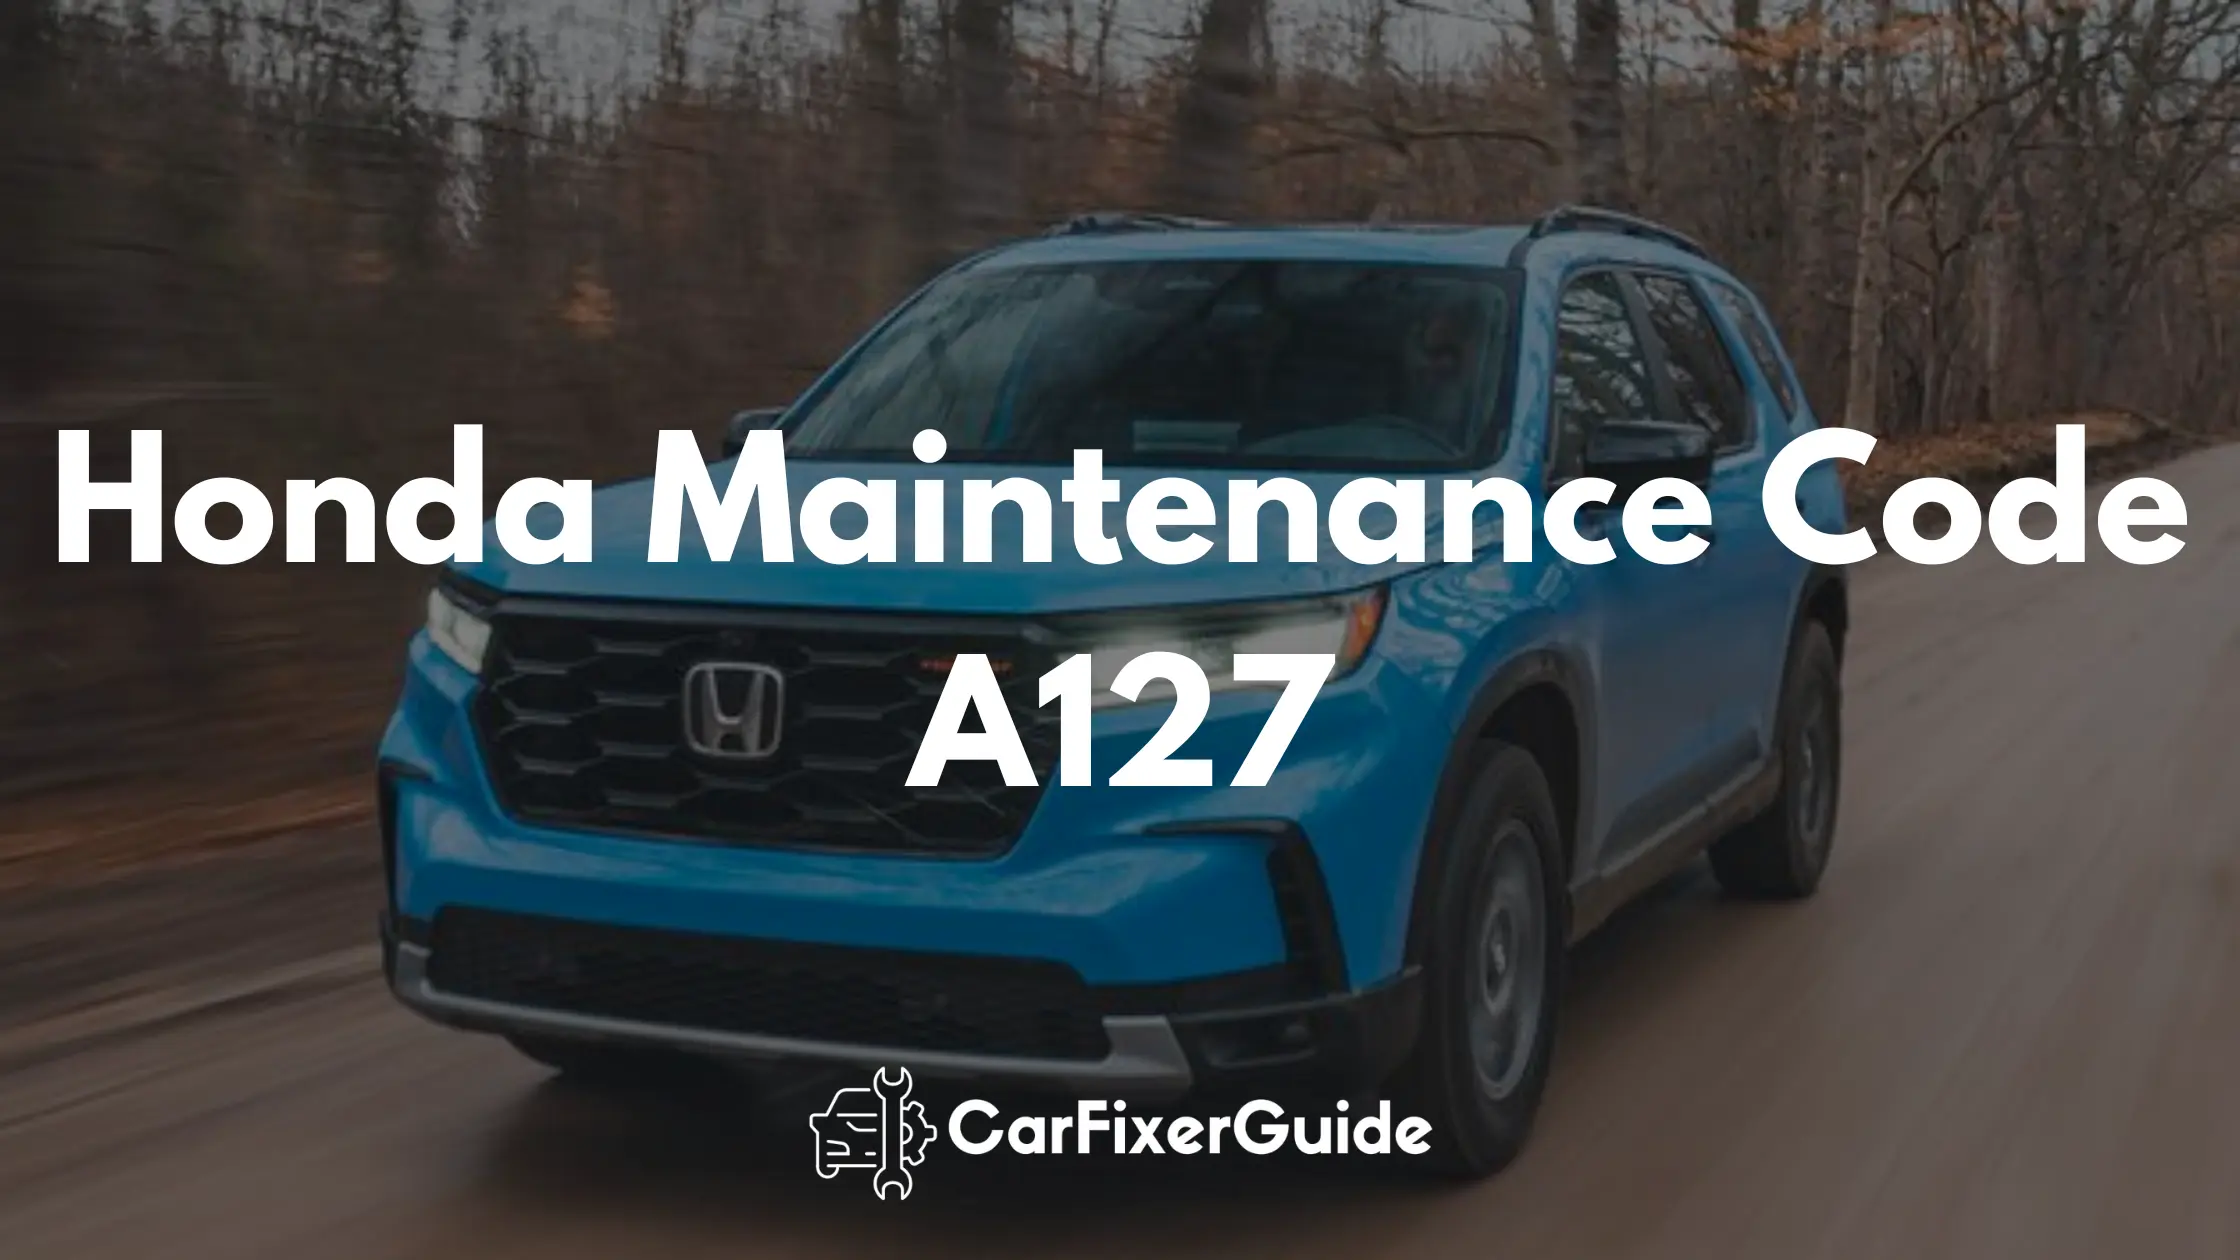 Honda Maintenance Code A127